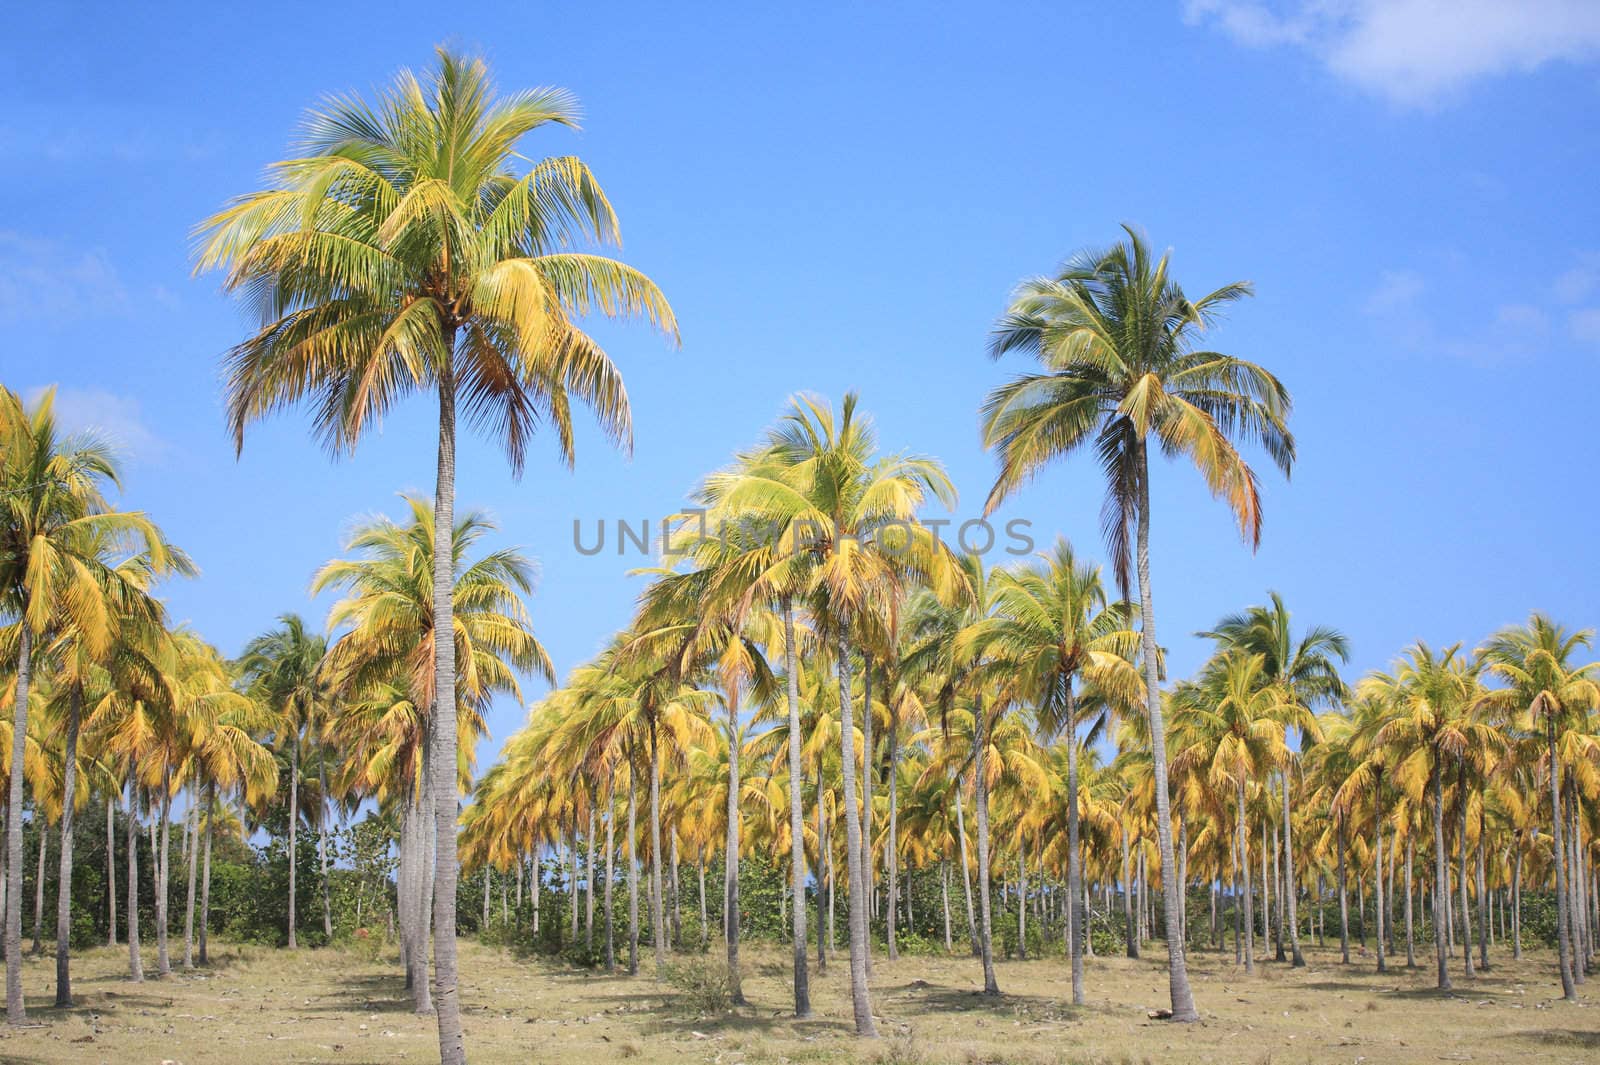 Coconut palm trees in Cuba.